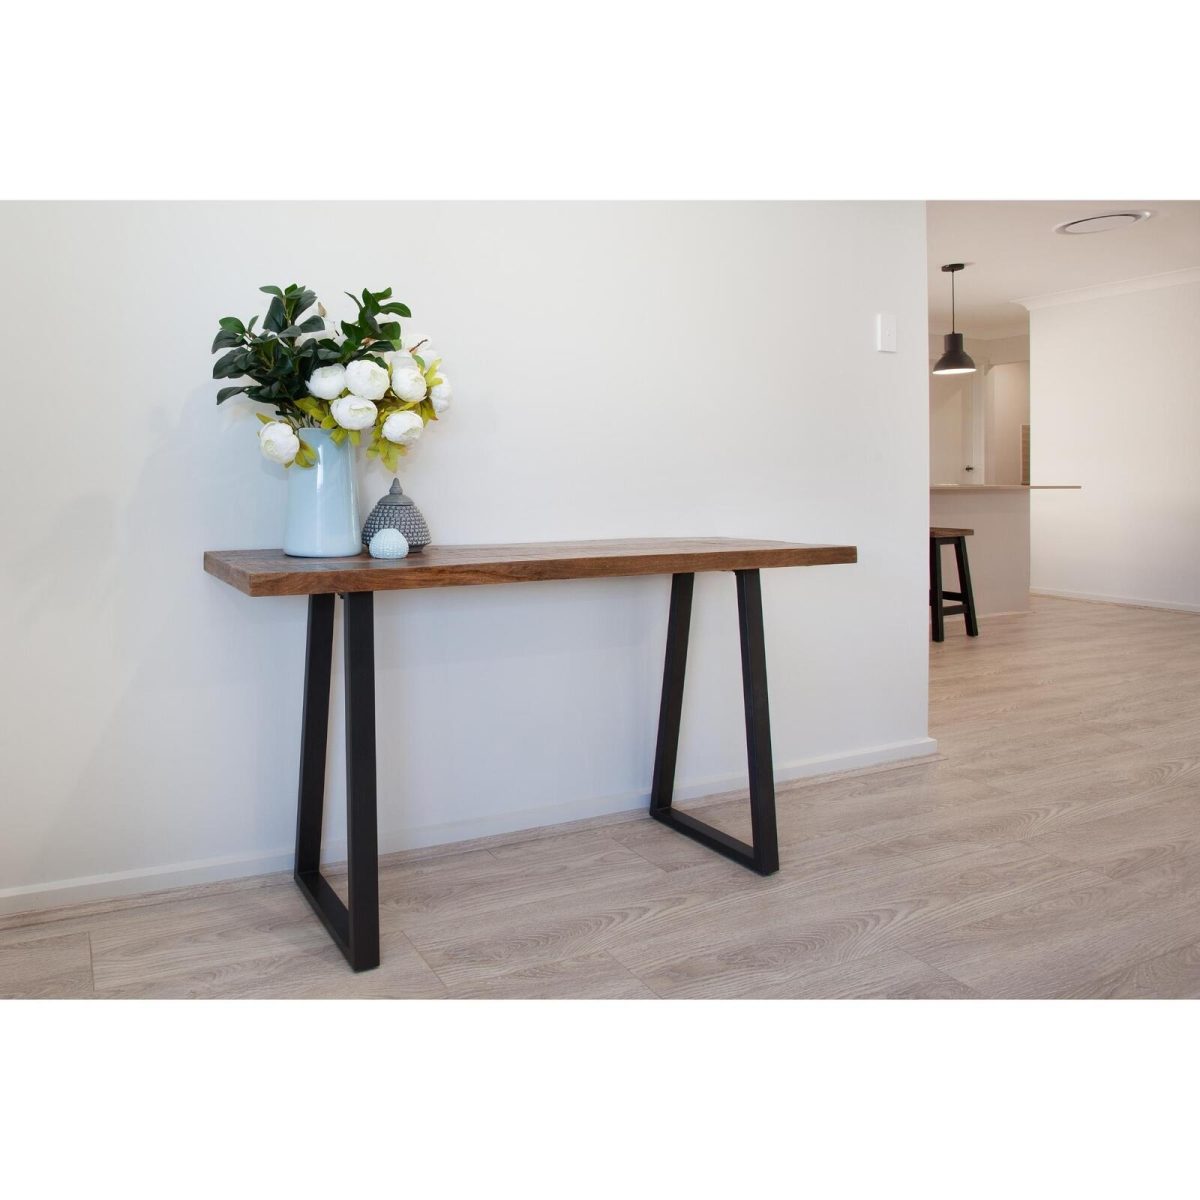 Orangevale Console Table 140cm Live Edge Solid Mango Wood Unique Furniture -Natural